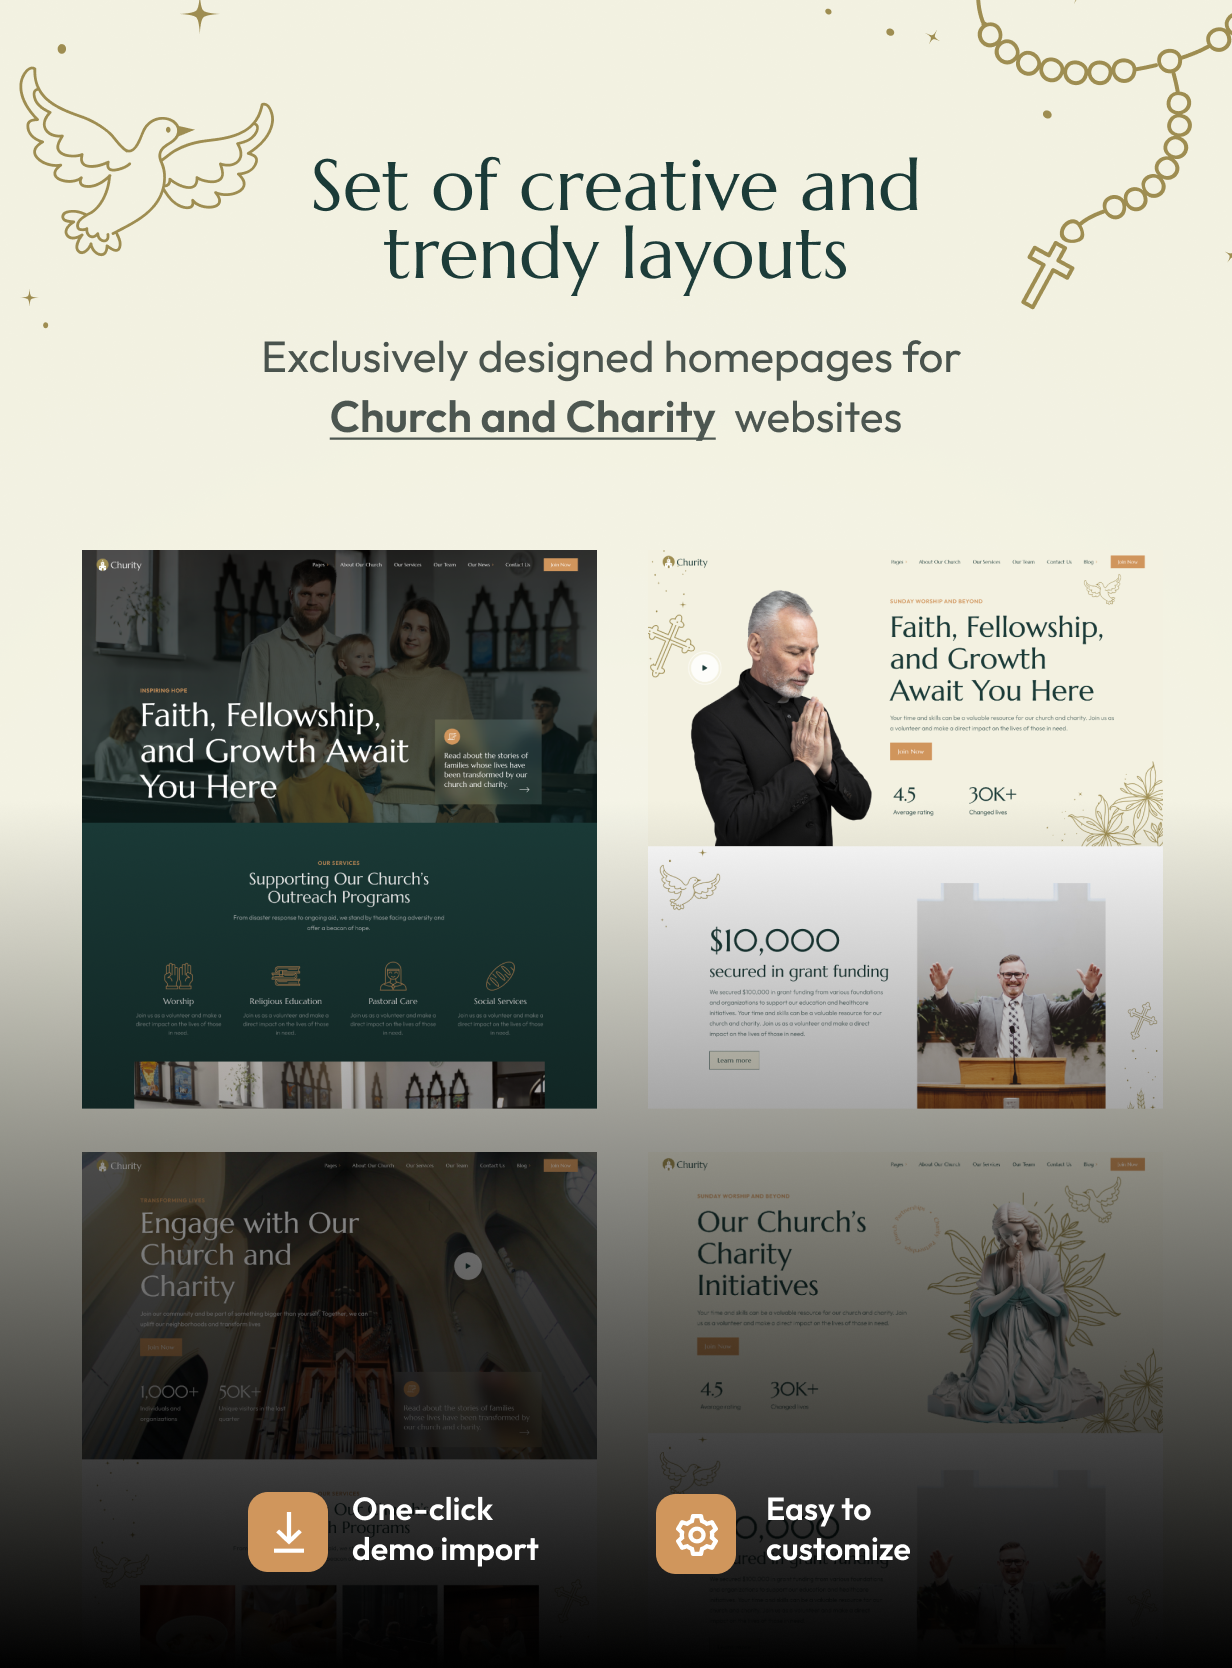 Churity - Church and Charity WordPress Theme